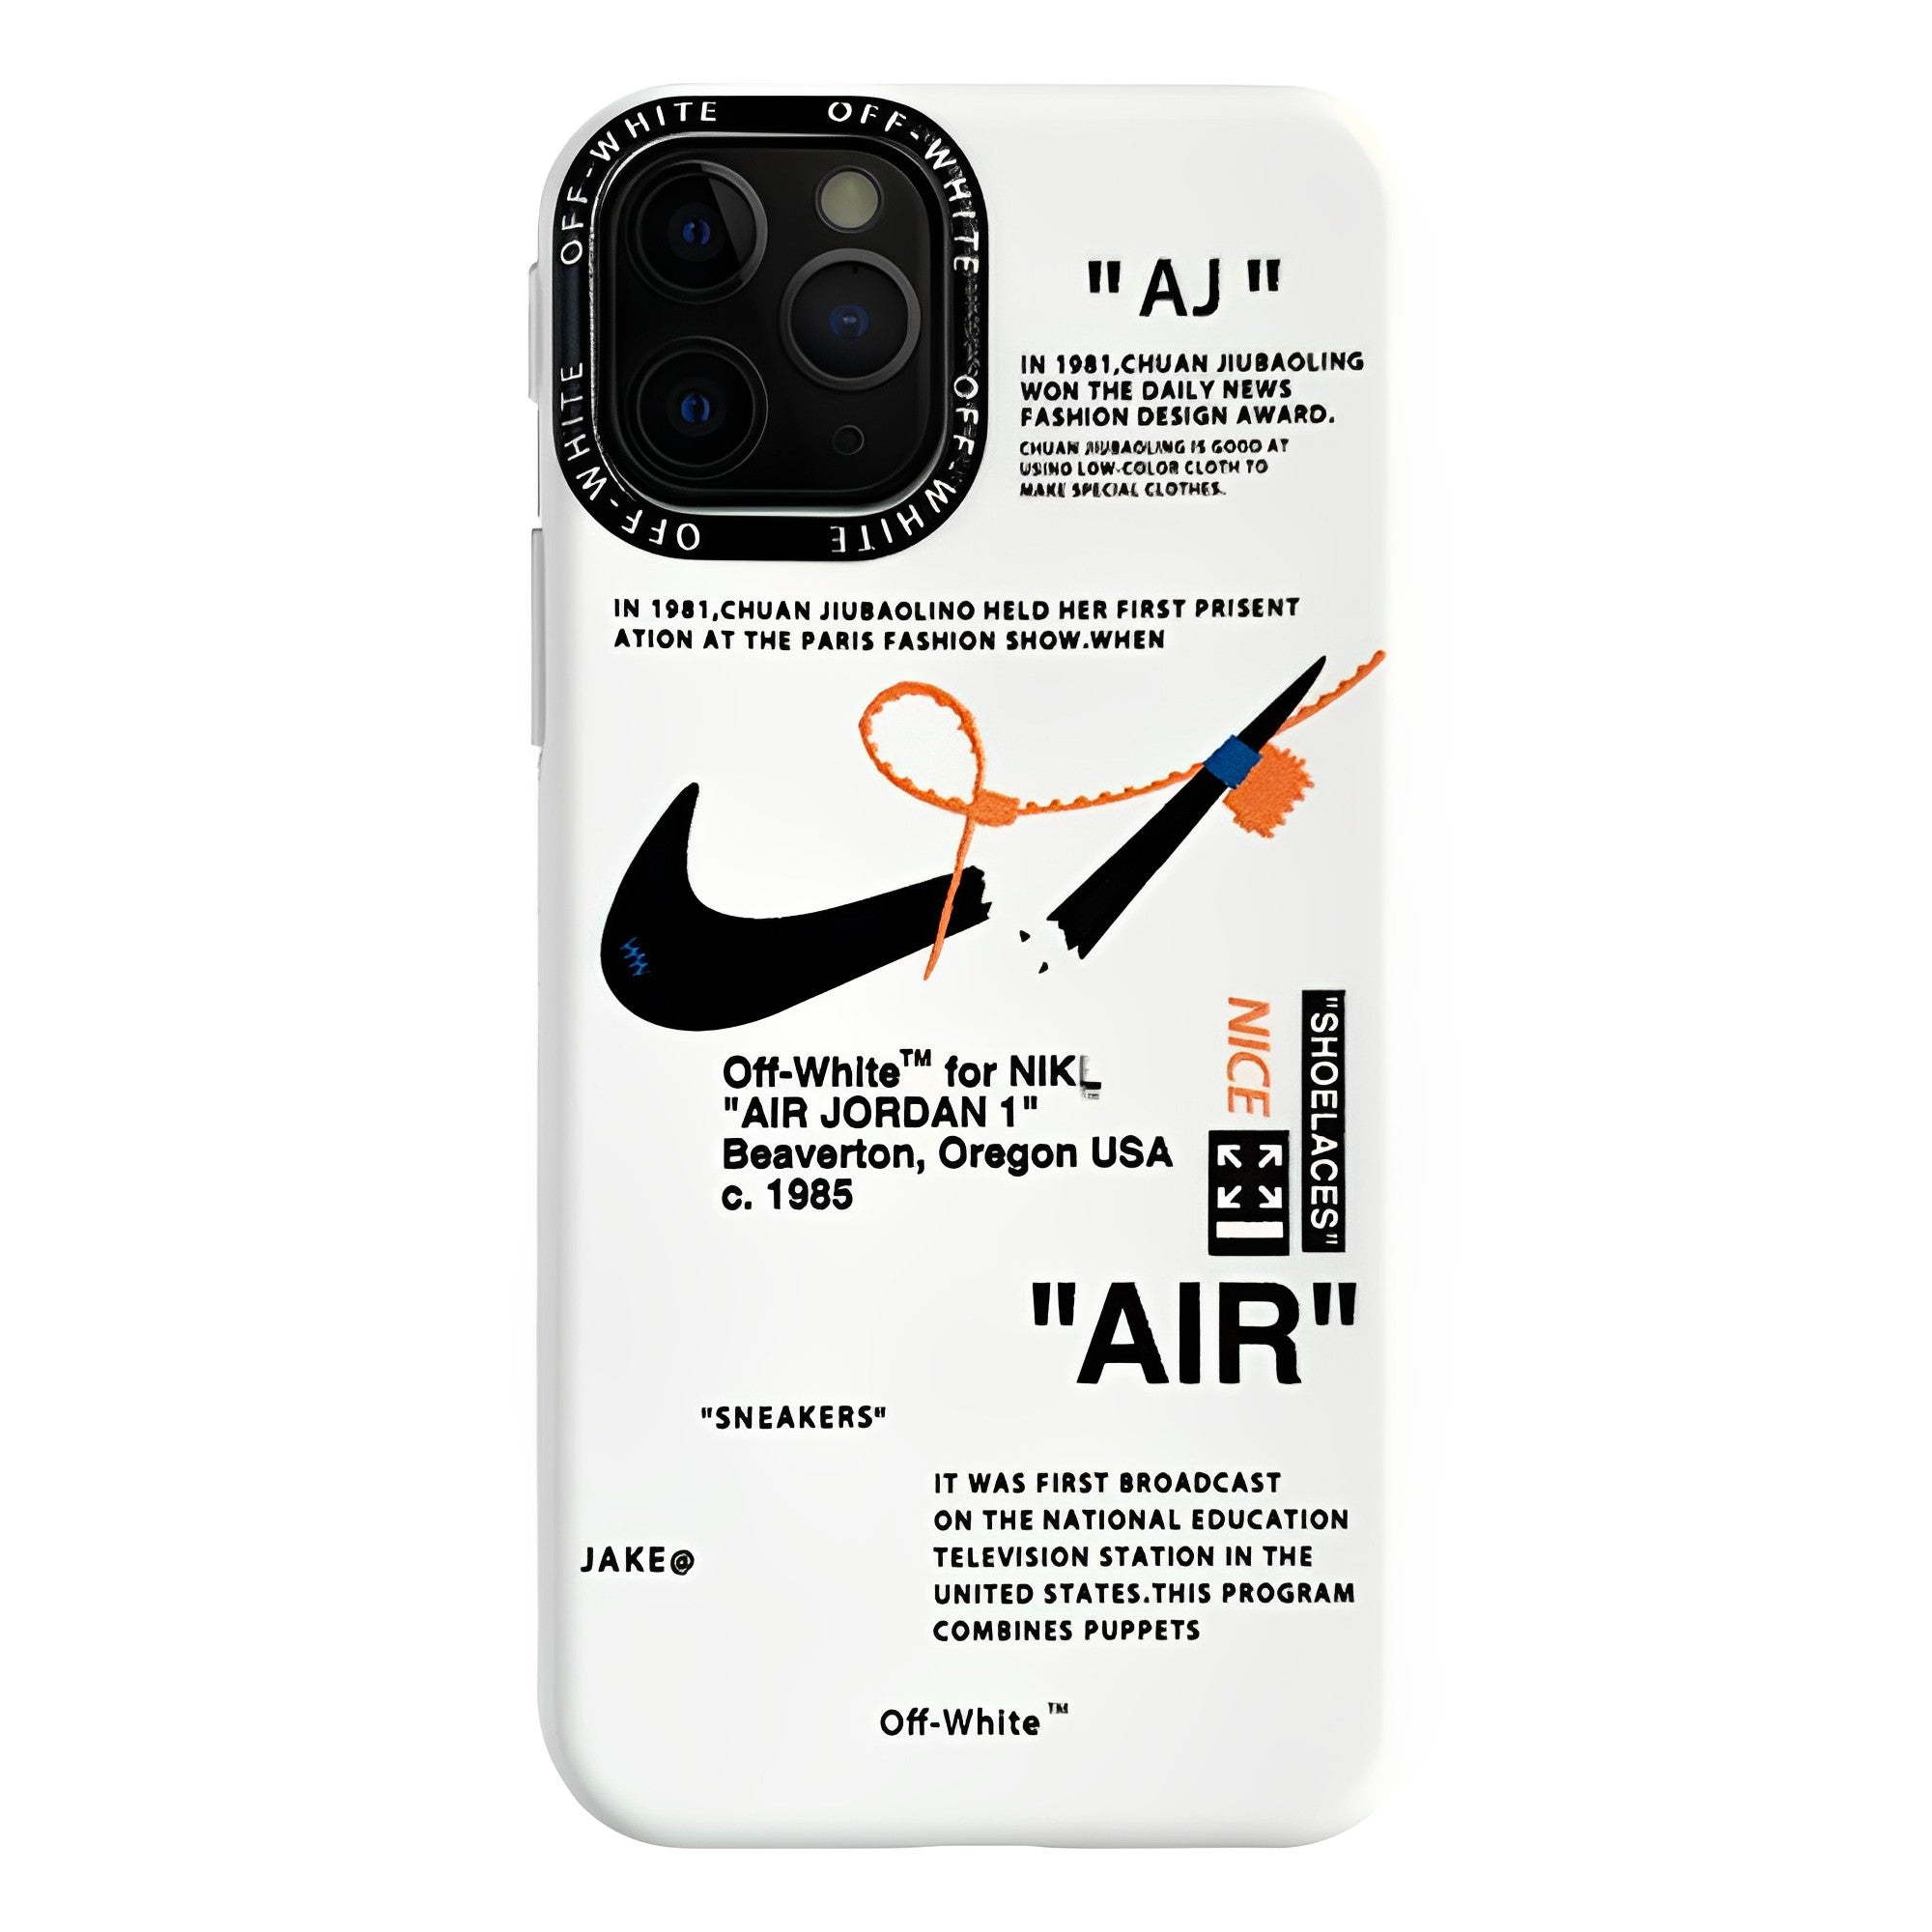 AIR JORDAN 1 ×NIKE Tag iPhone Case